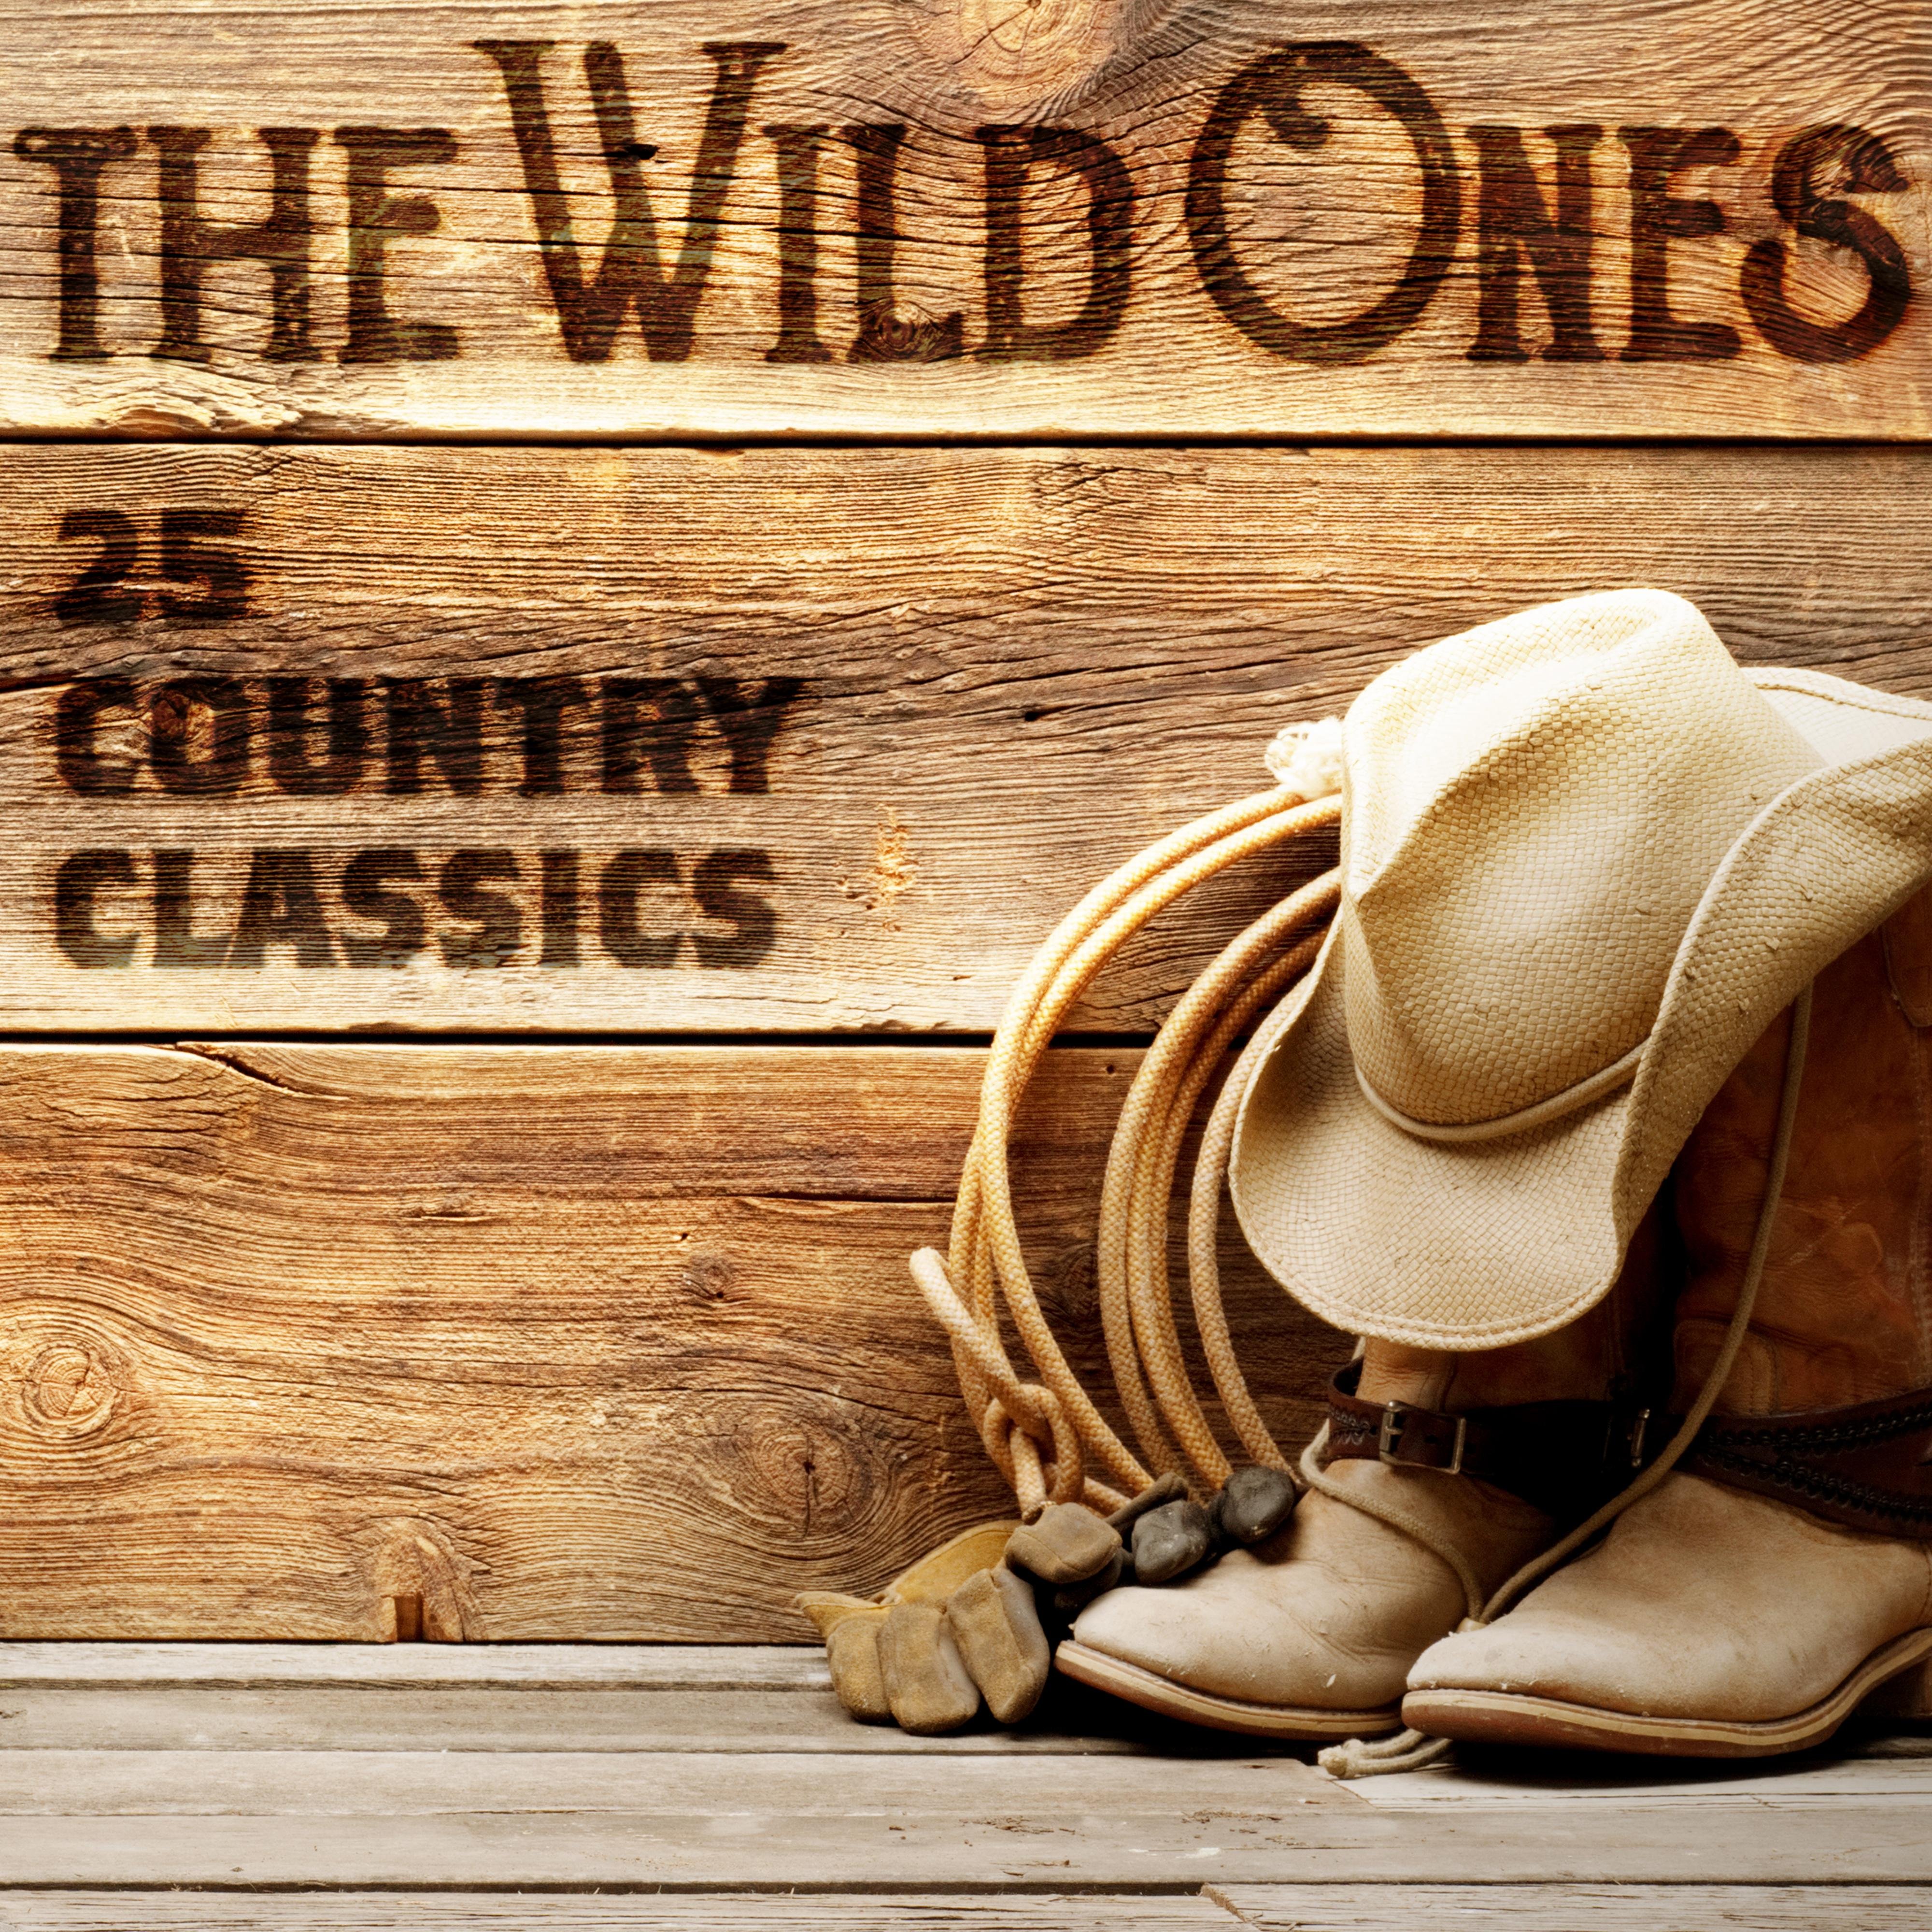 The Wild Ones - 25 Country Classics